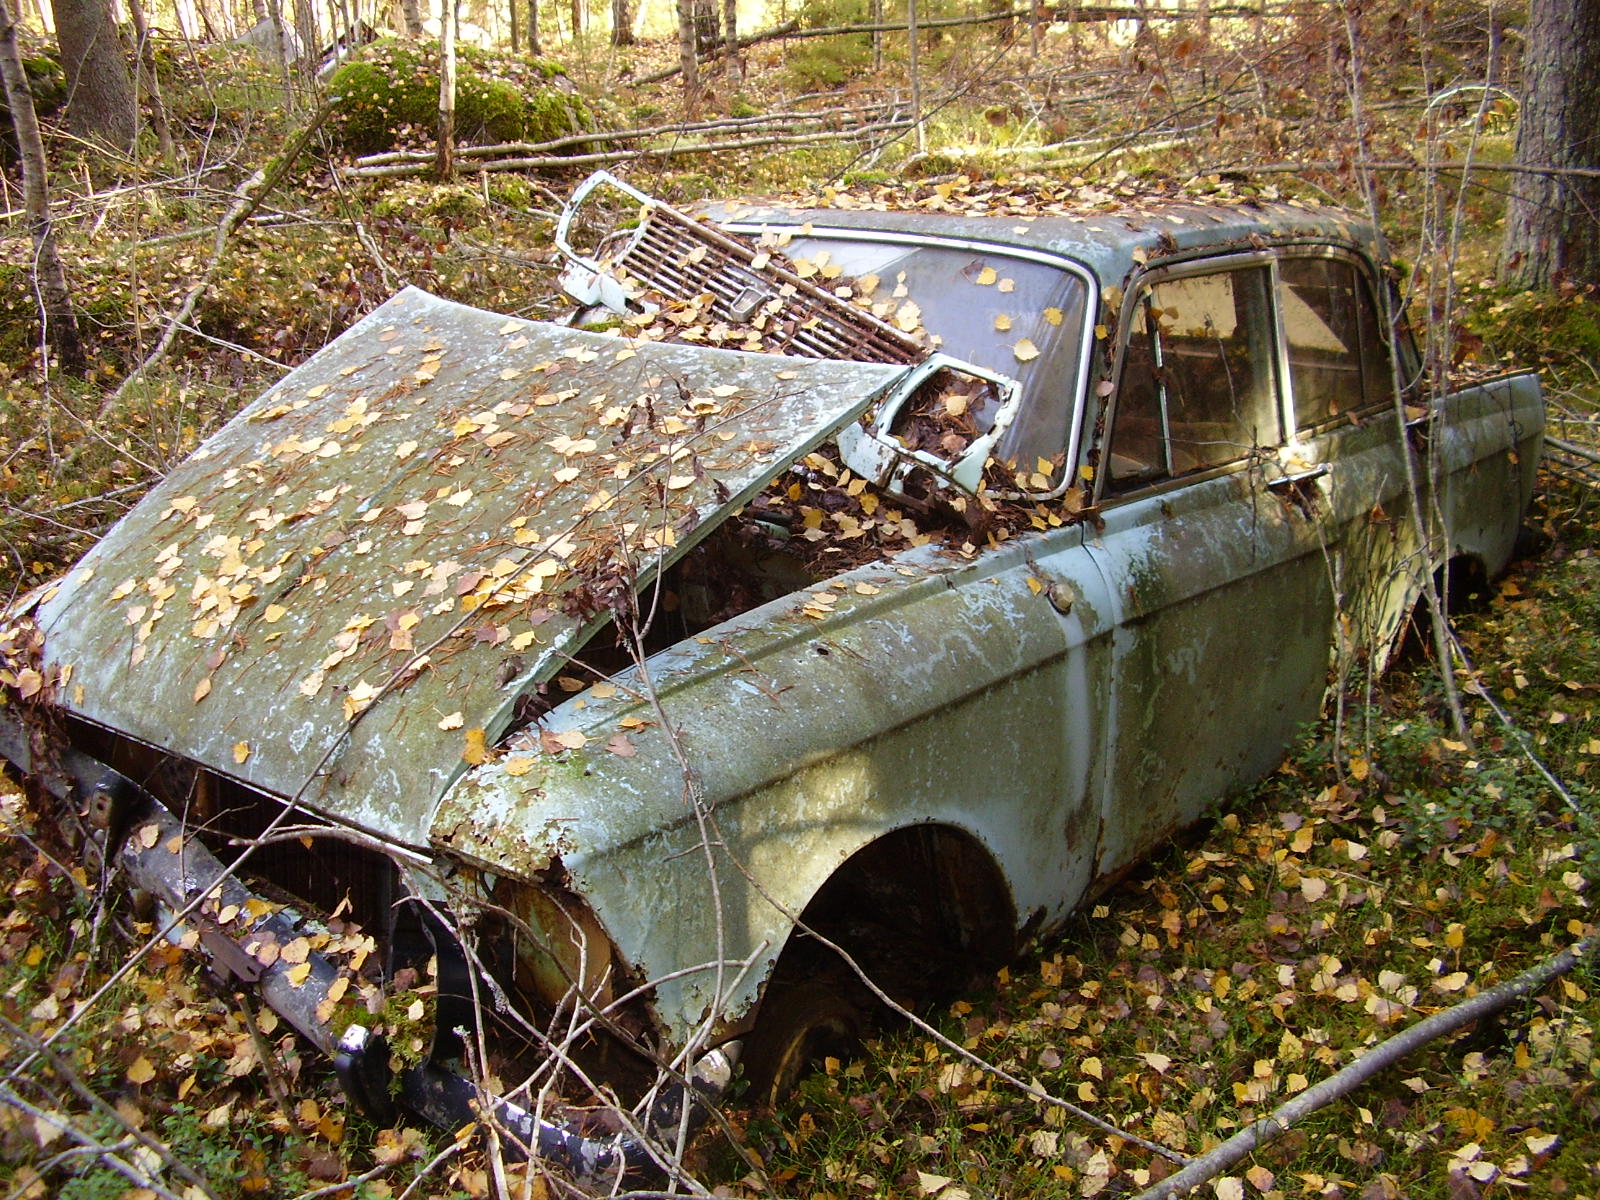 File:Scrap car in the woods.JPG - Wikimedia Commons